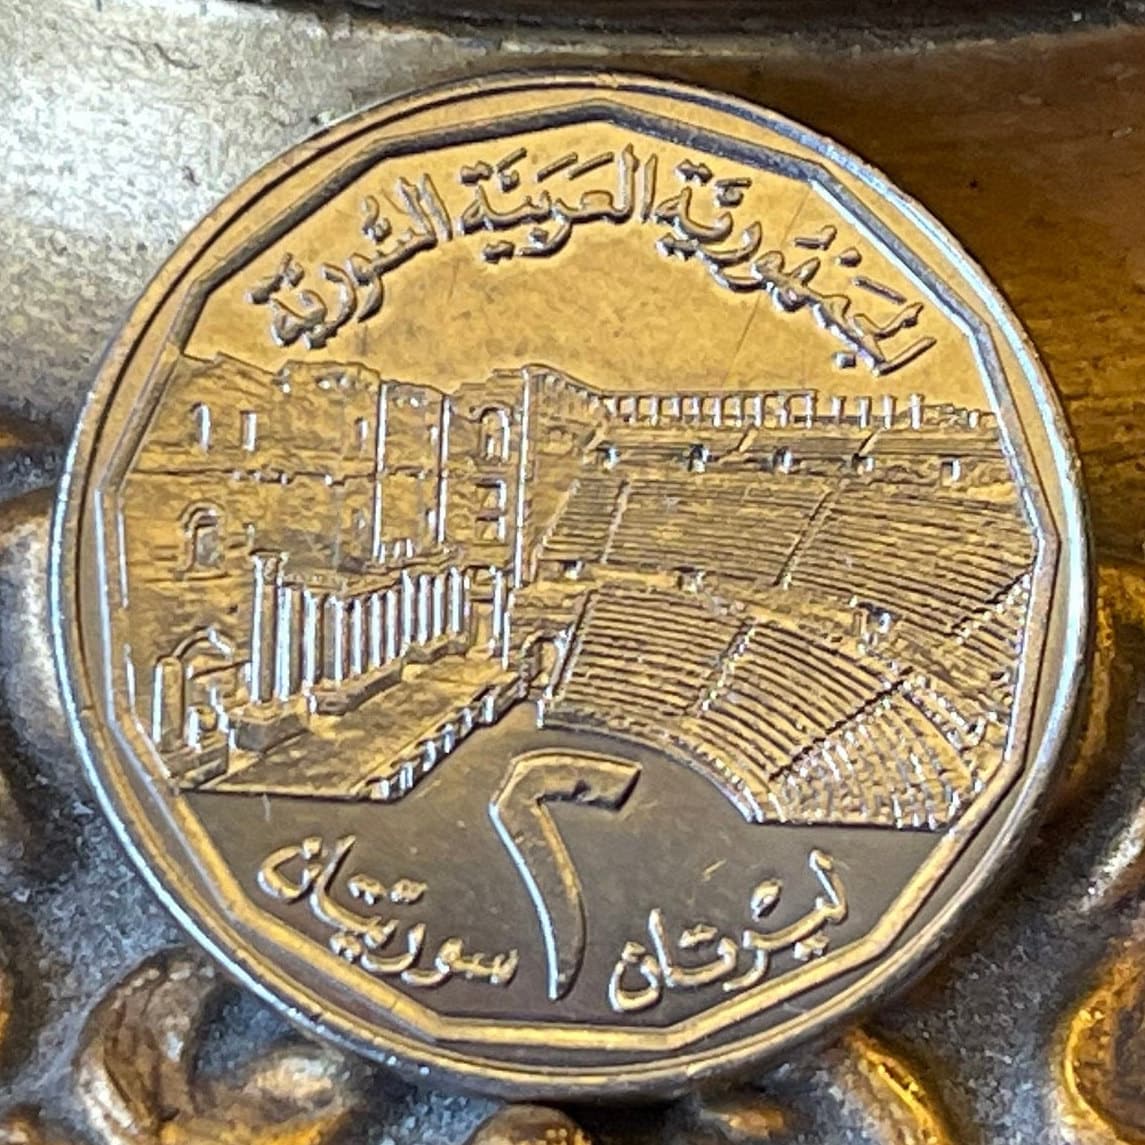 Hawk of Quraish & Roman Gladiator Theatre at Bosra 2 Lira Syria Authentic Coin Charm for Jewelry and Craft Making (Falcon)